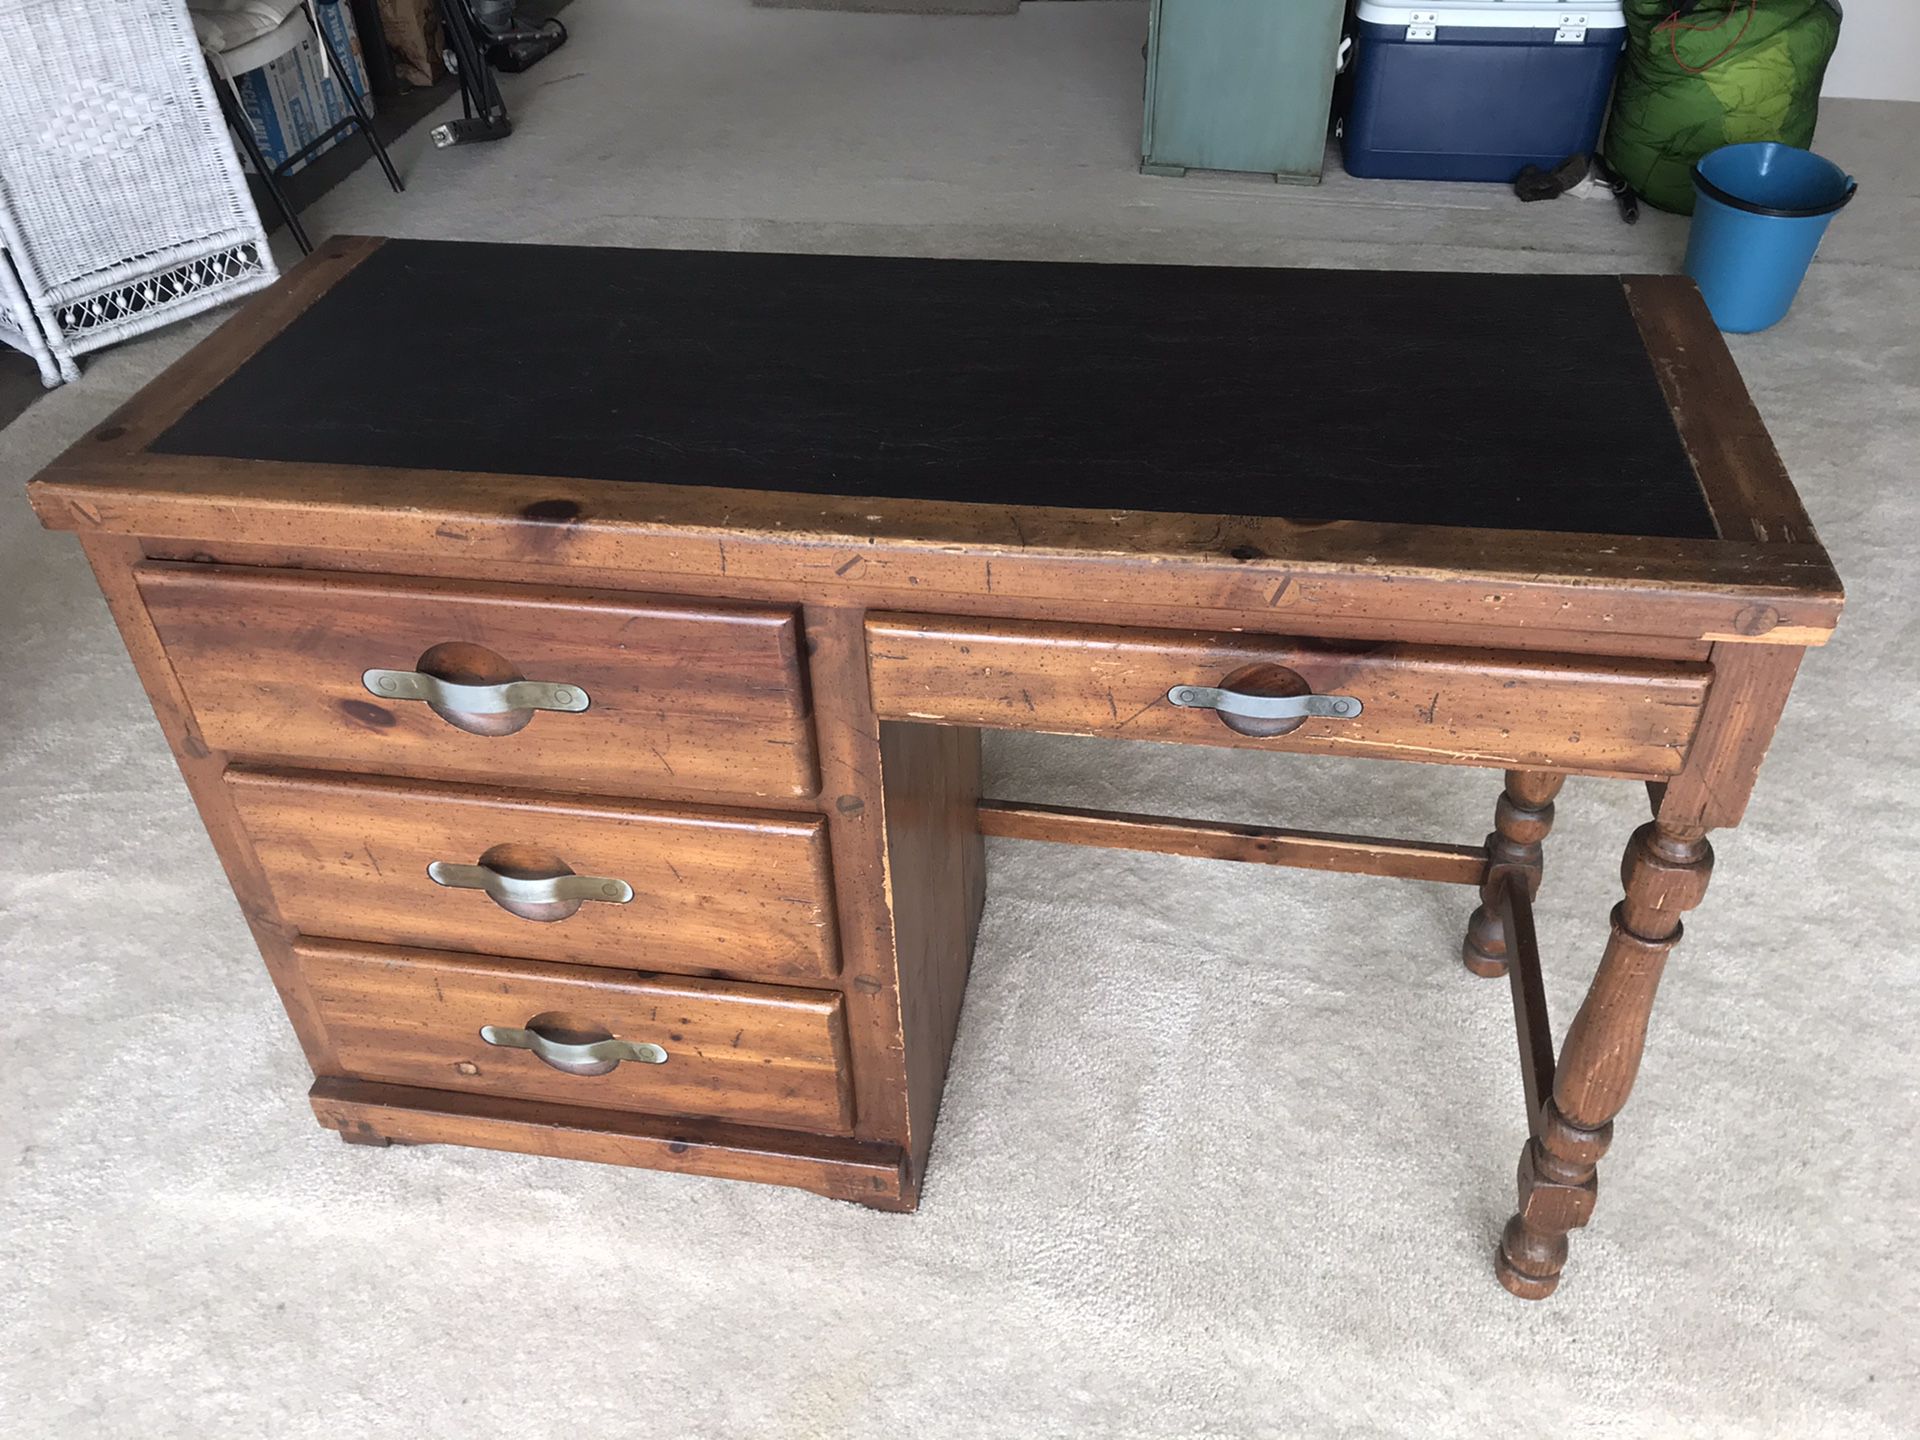 Antique style solid wood desk